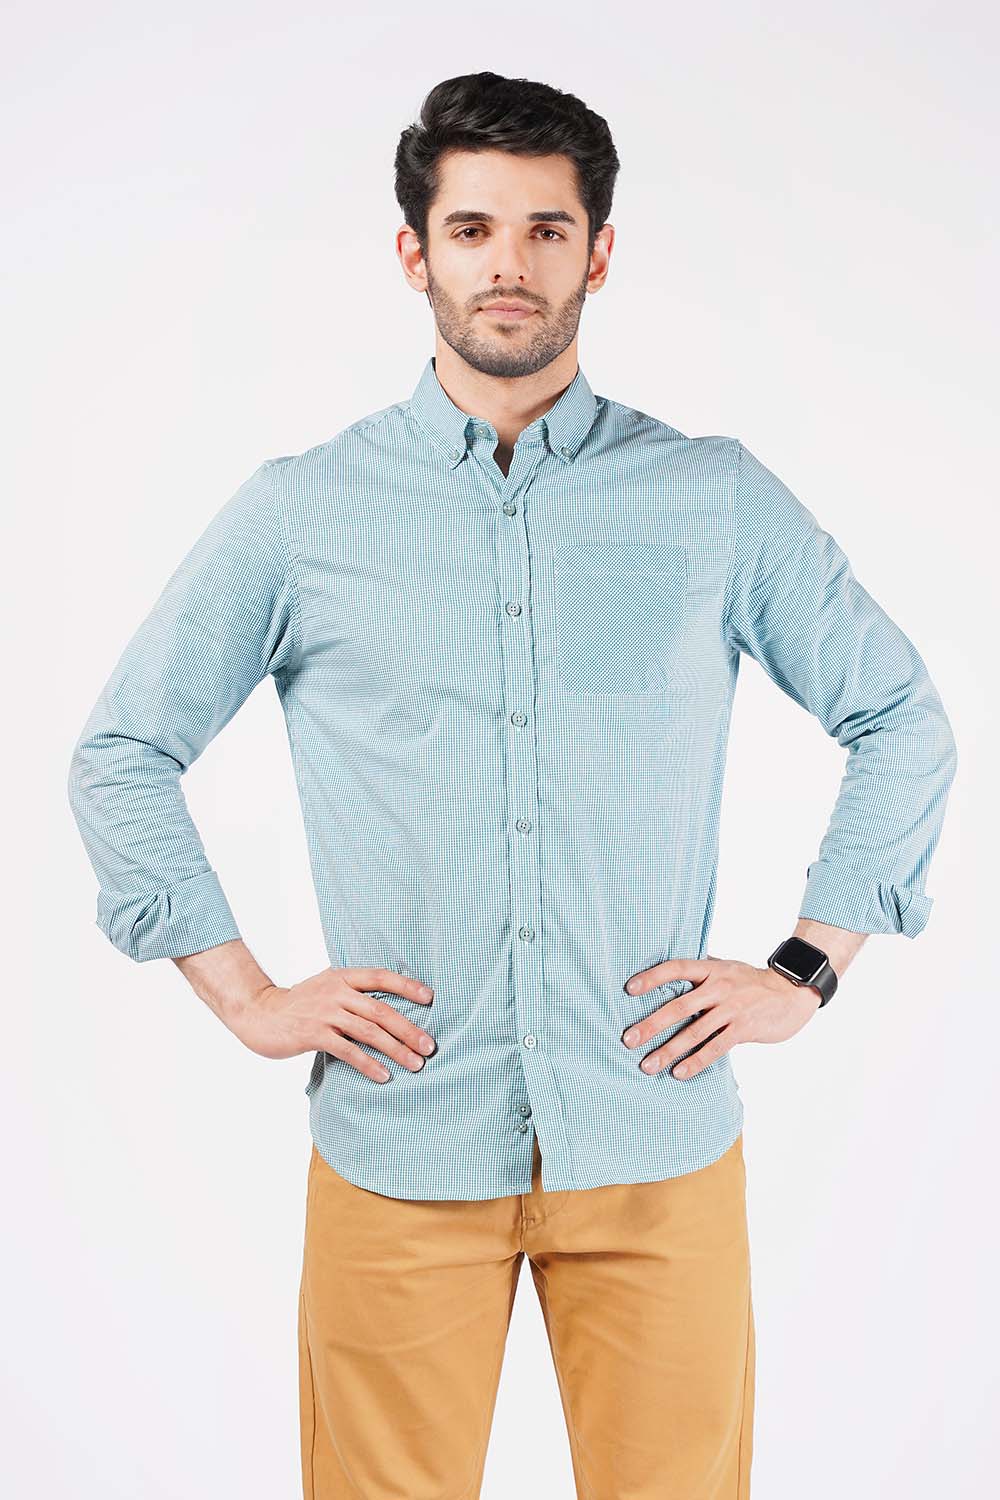 Men's Full Sleeves Casual Shirt